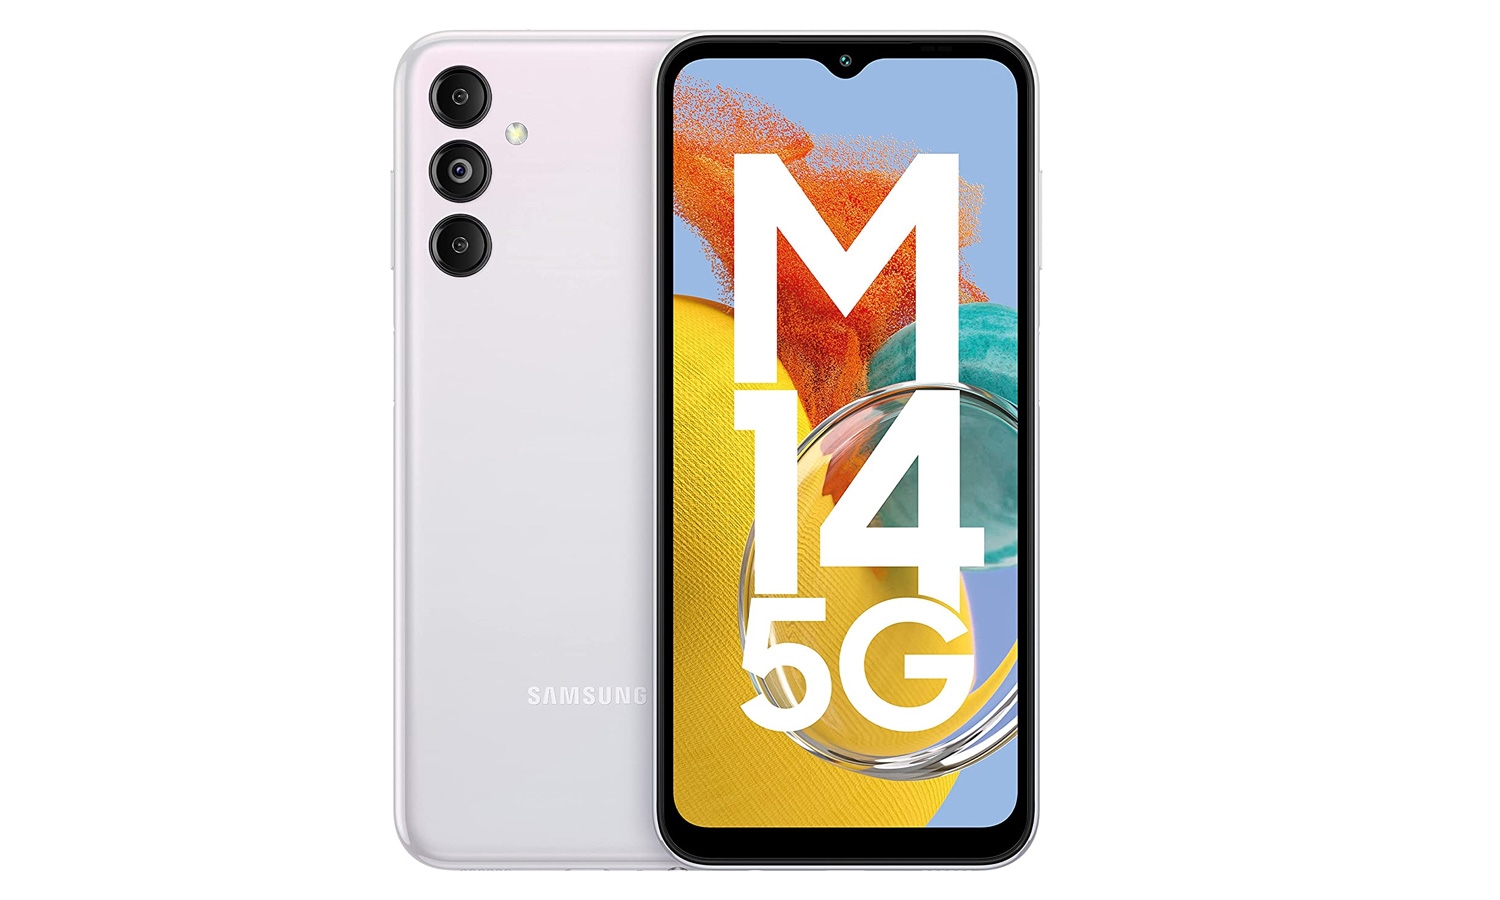 Samsung-Galaxy-M14-5G